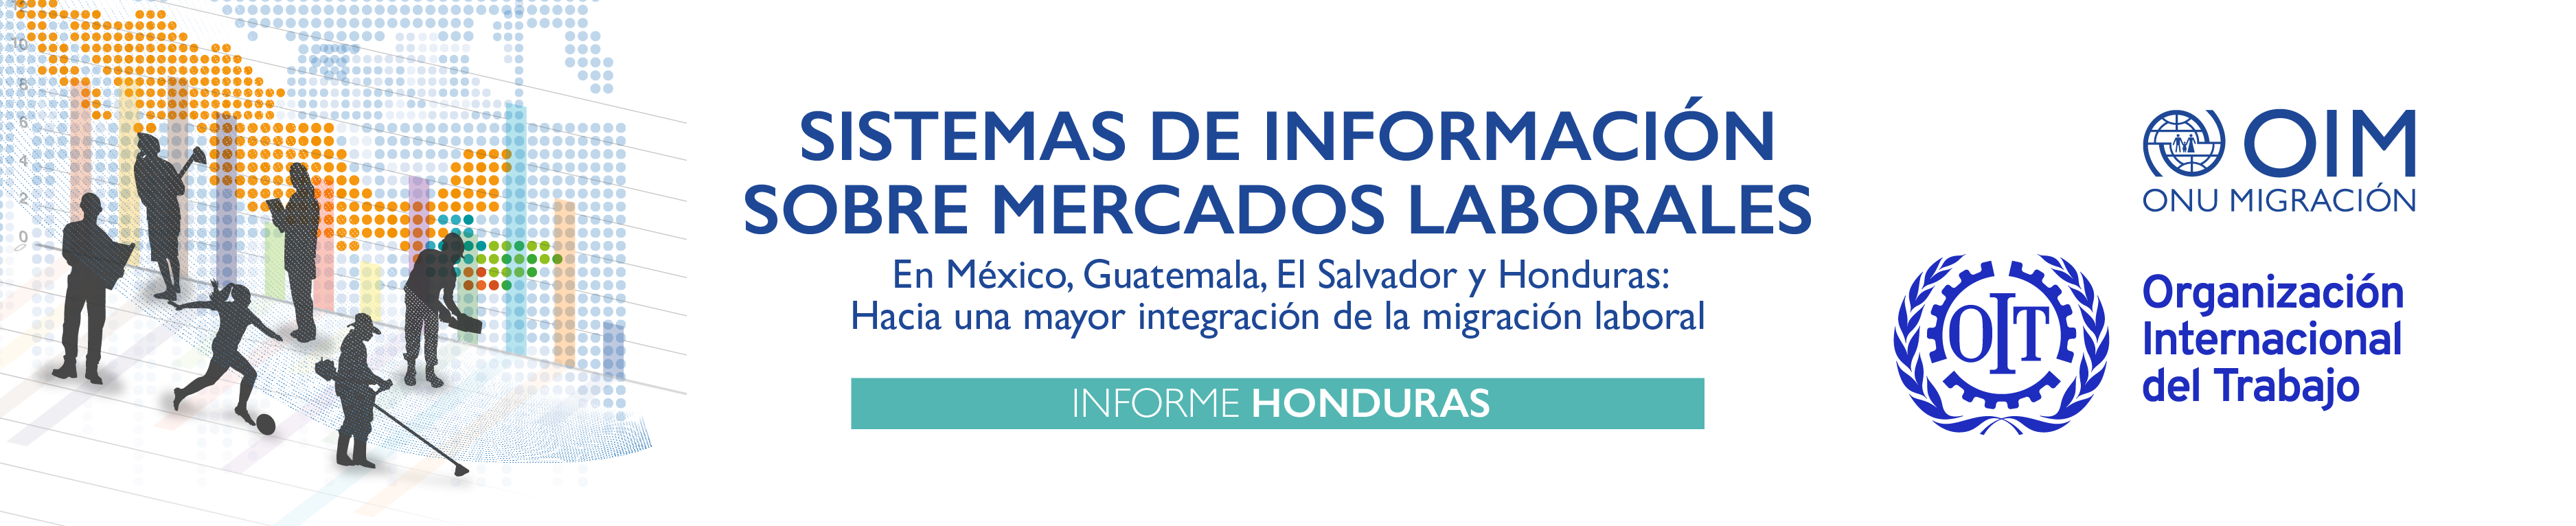 Sistemas de información sobre mercados laborales: Informe Honduras